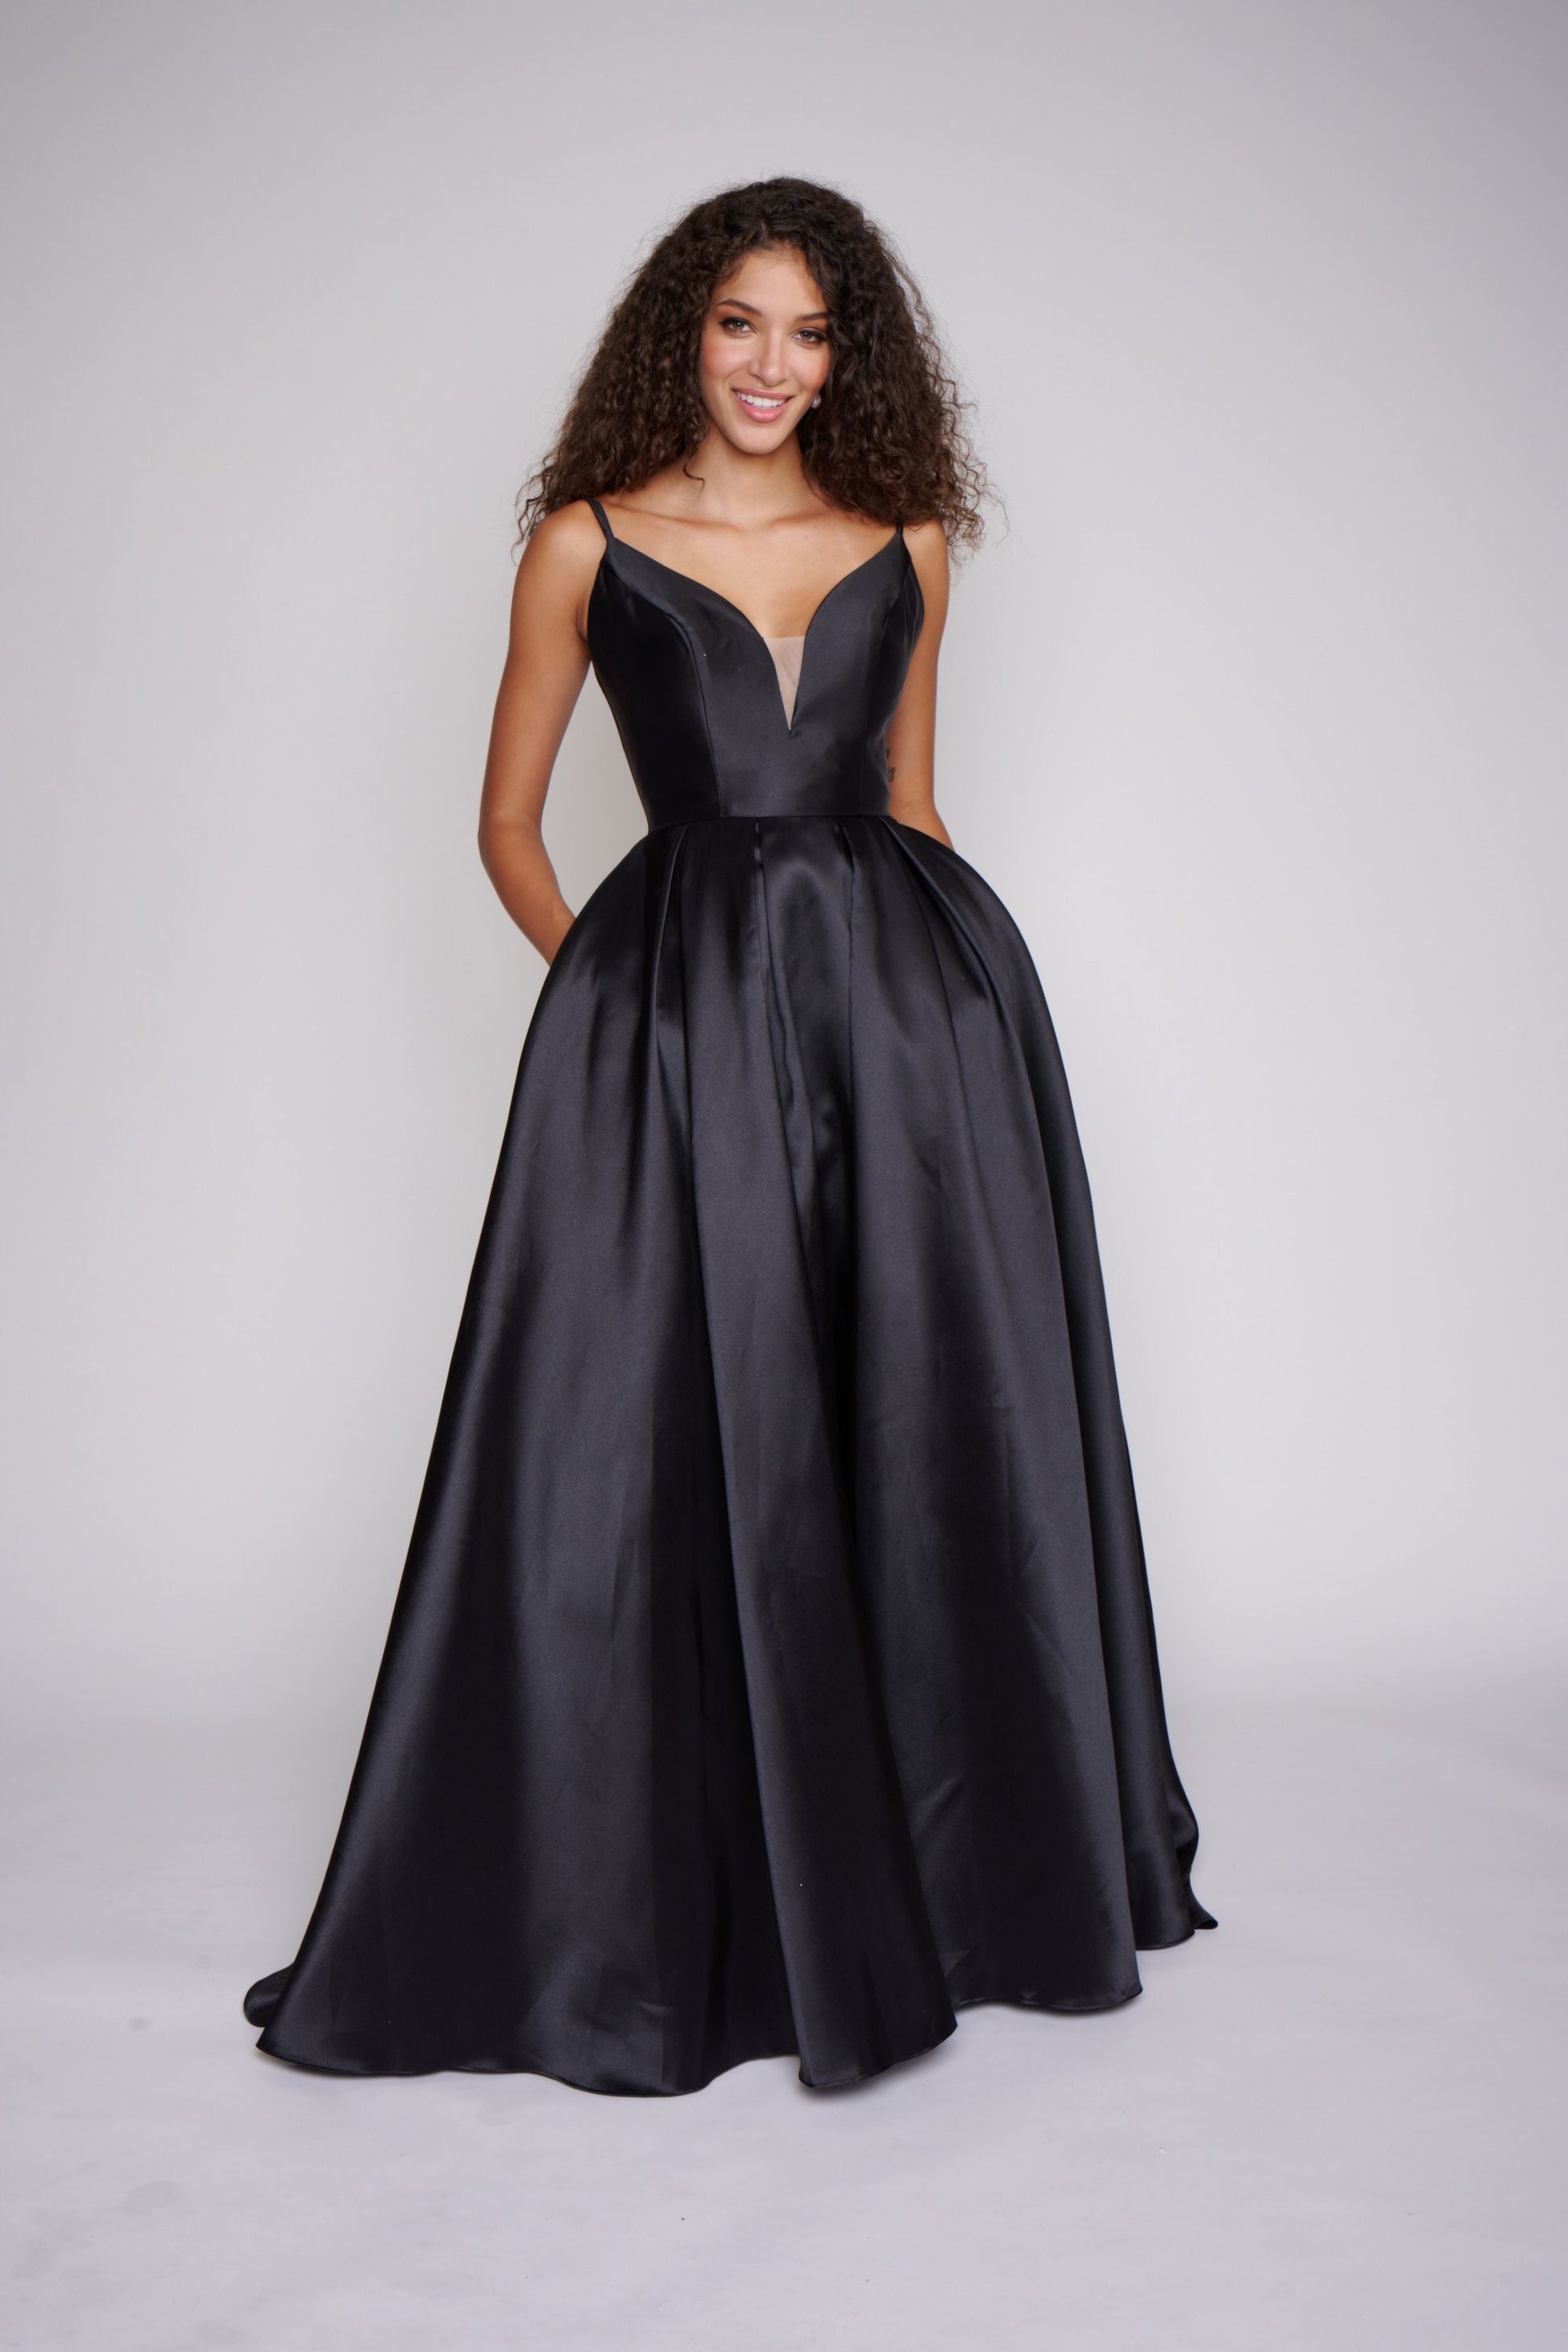 Nina-Canacci-B1900-Black-Prom-Dress-front-Ballgown